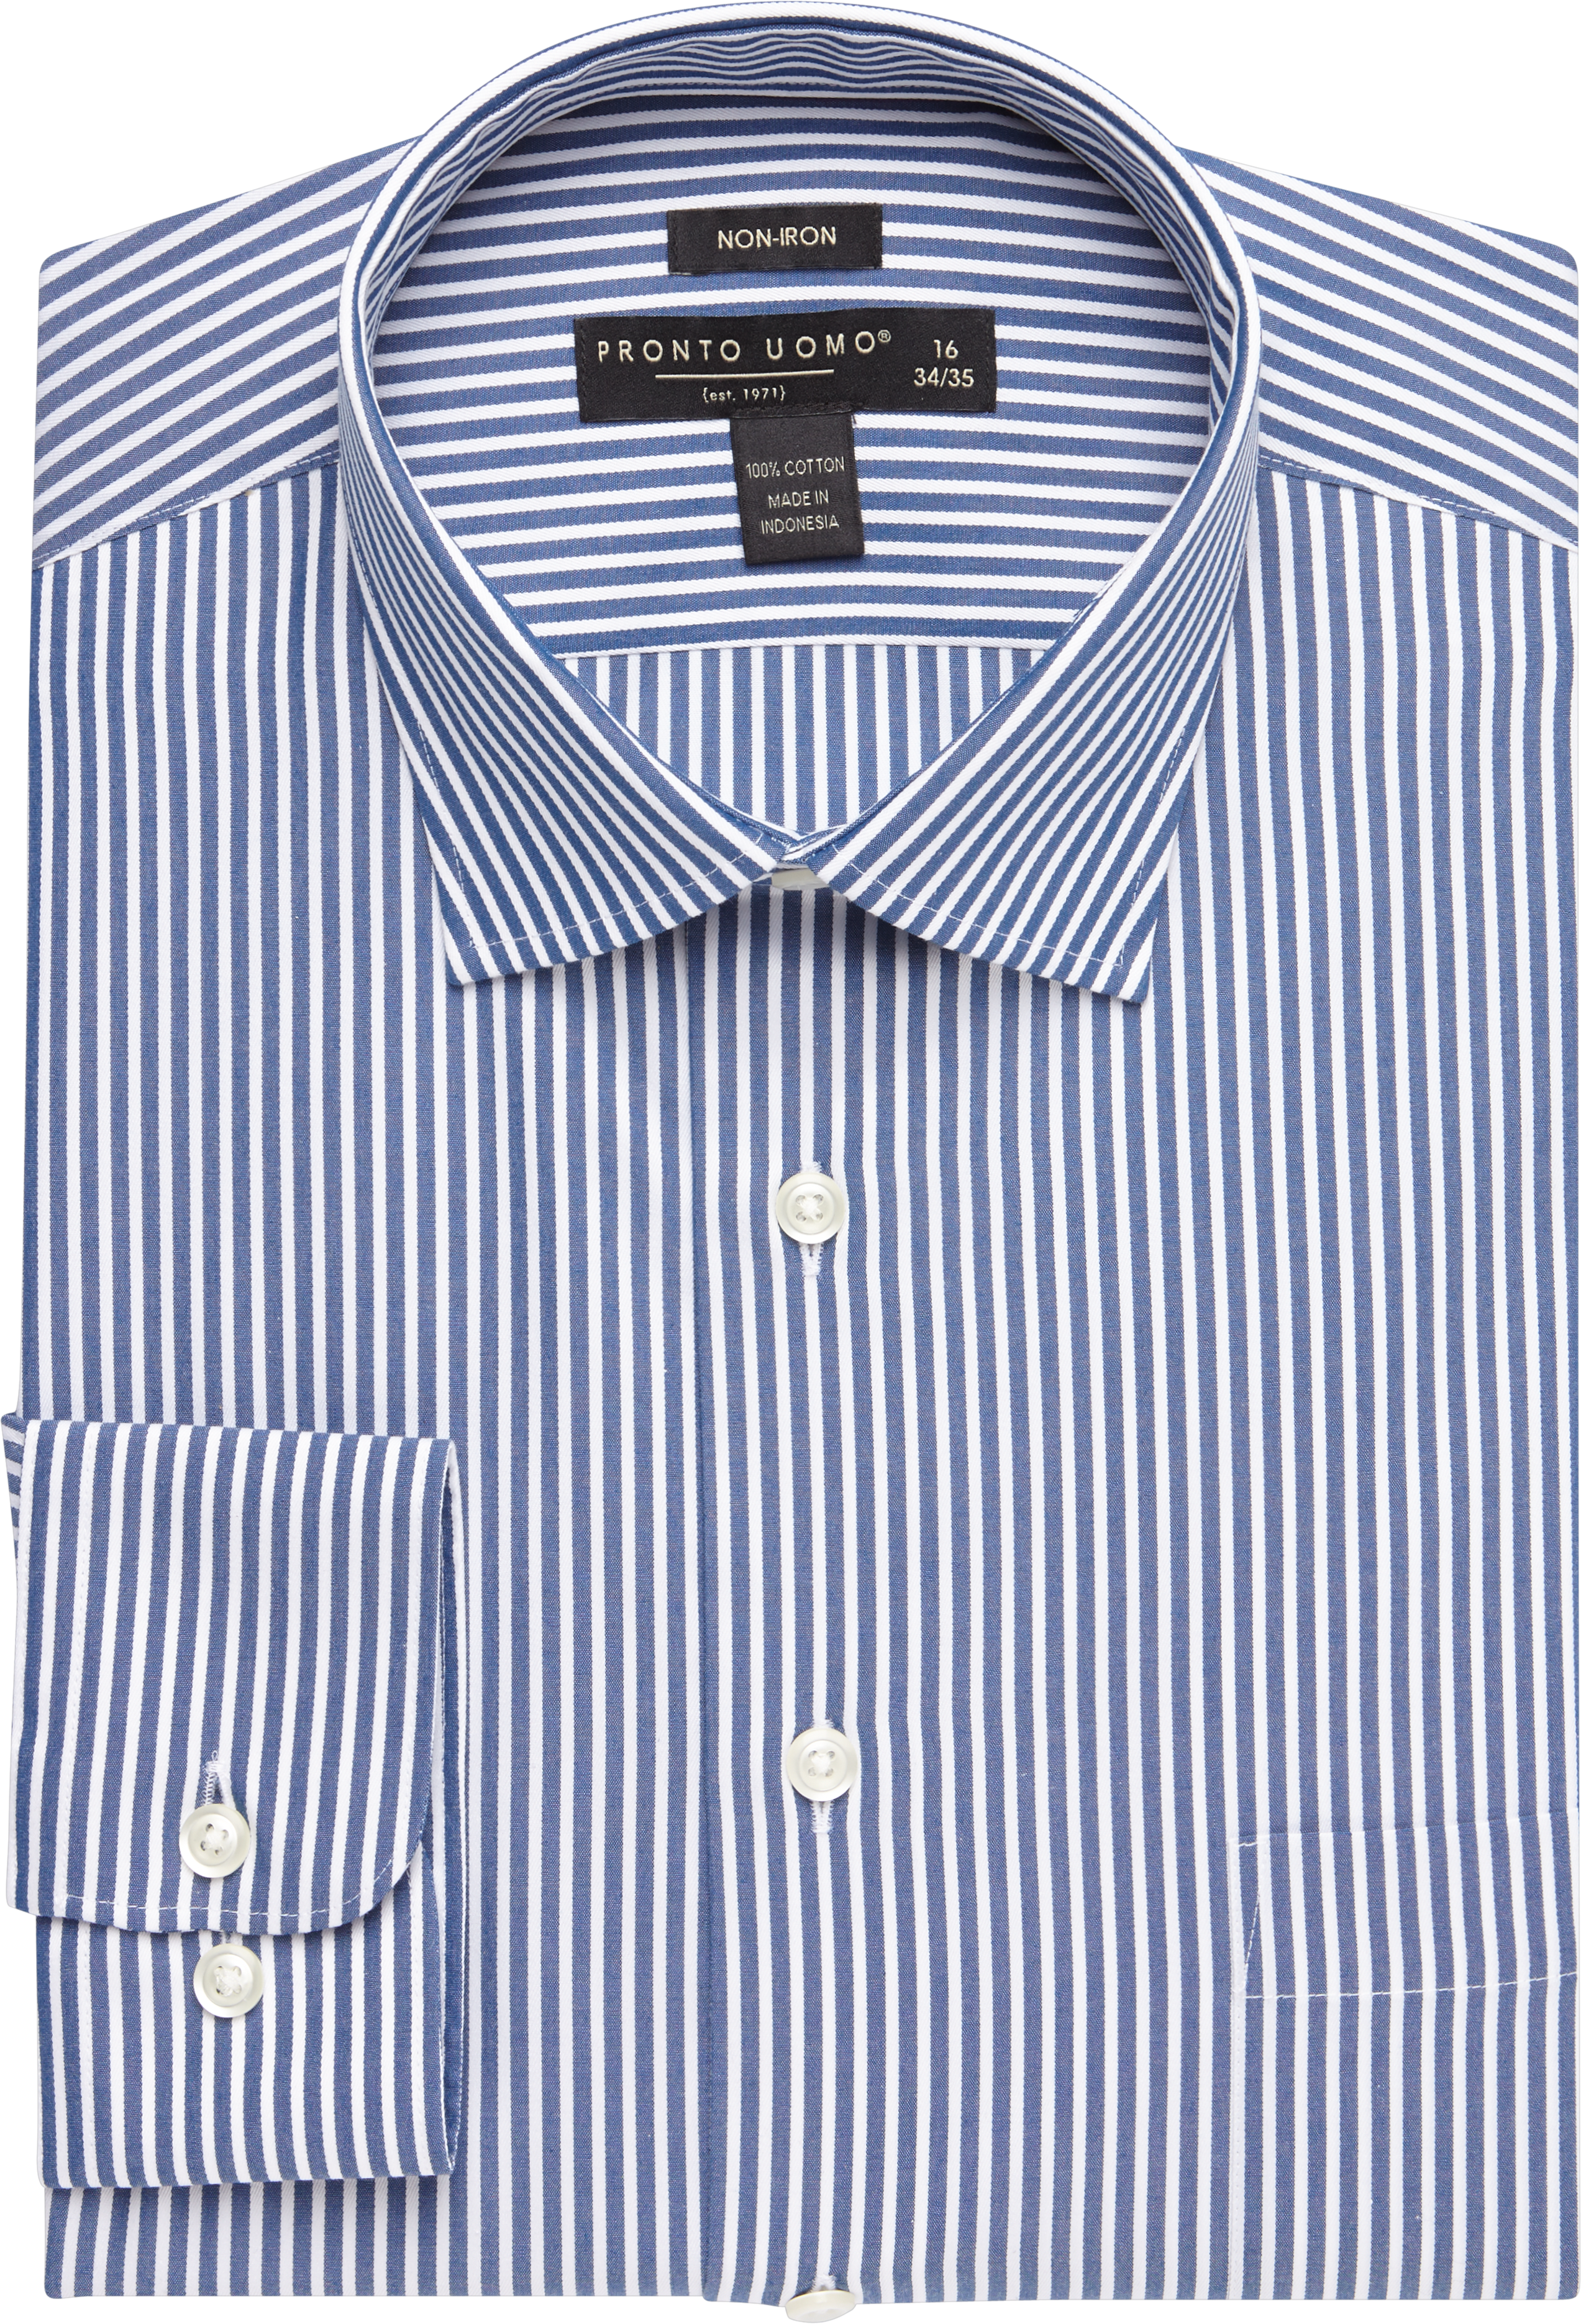 Pronto Uomo Blue Stripe Non-Iron Dress Shirt - Men's Sale | Men's Wearhouse